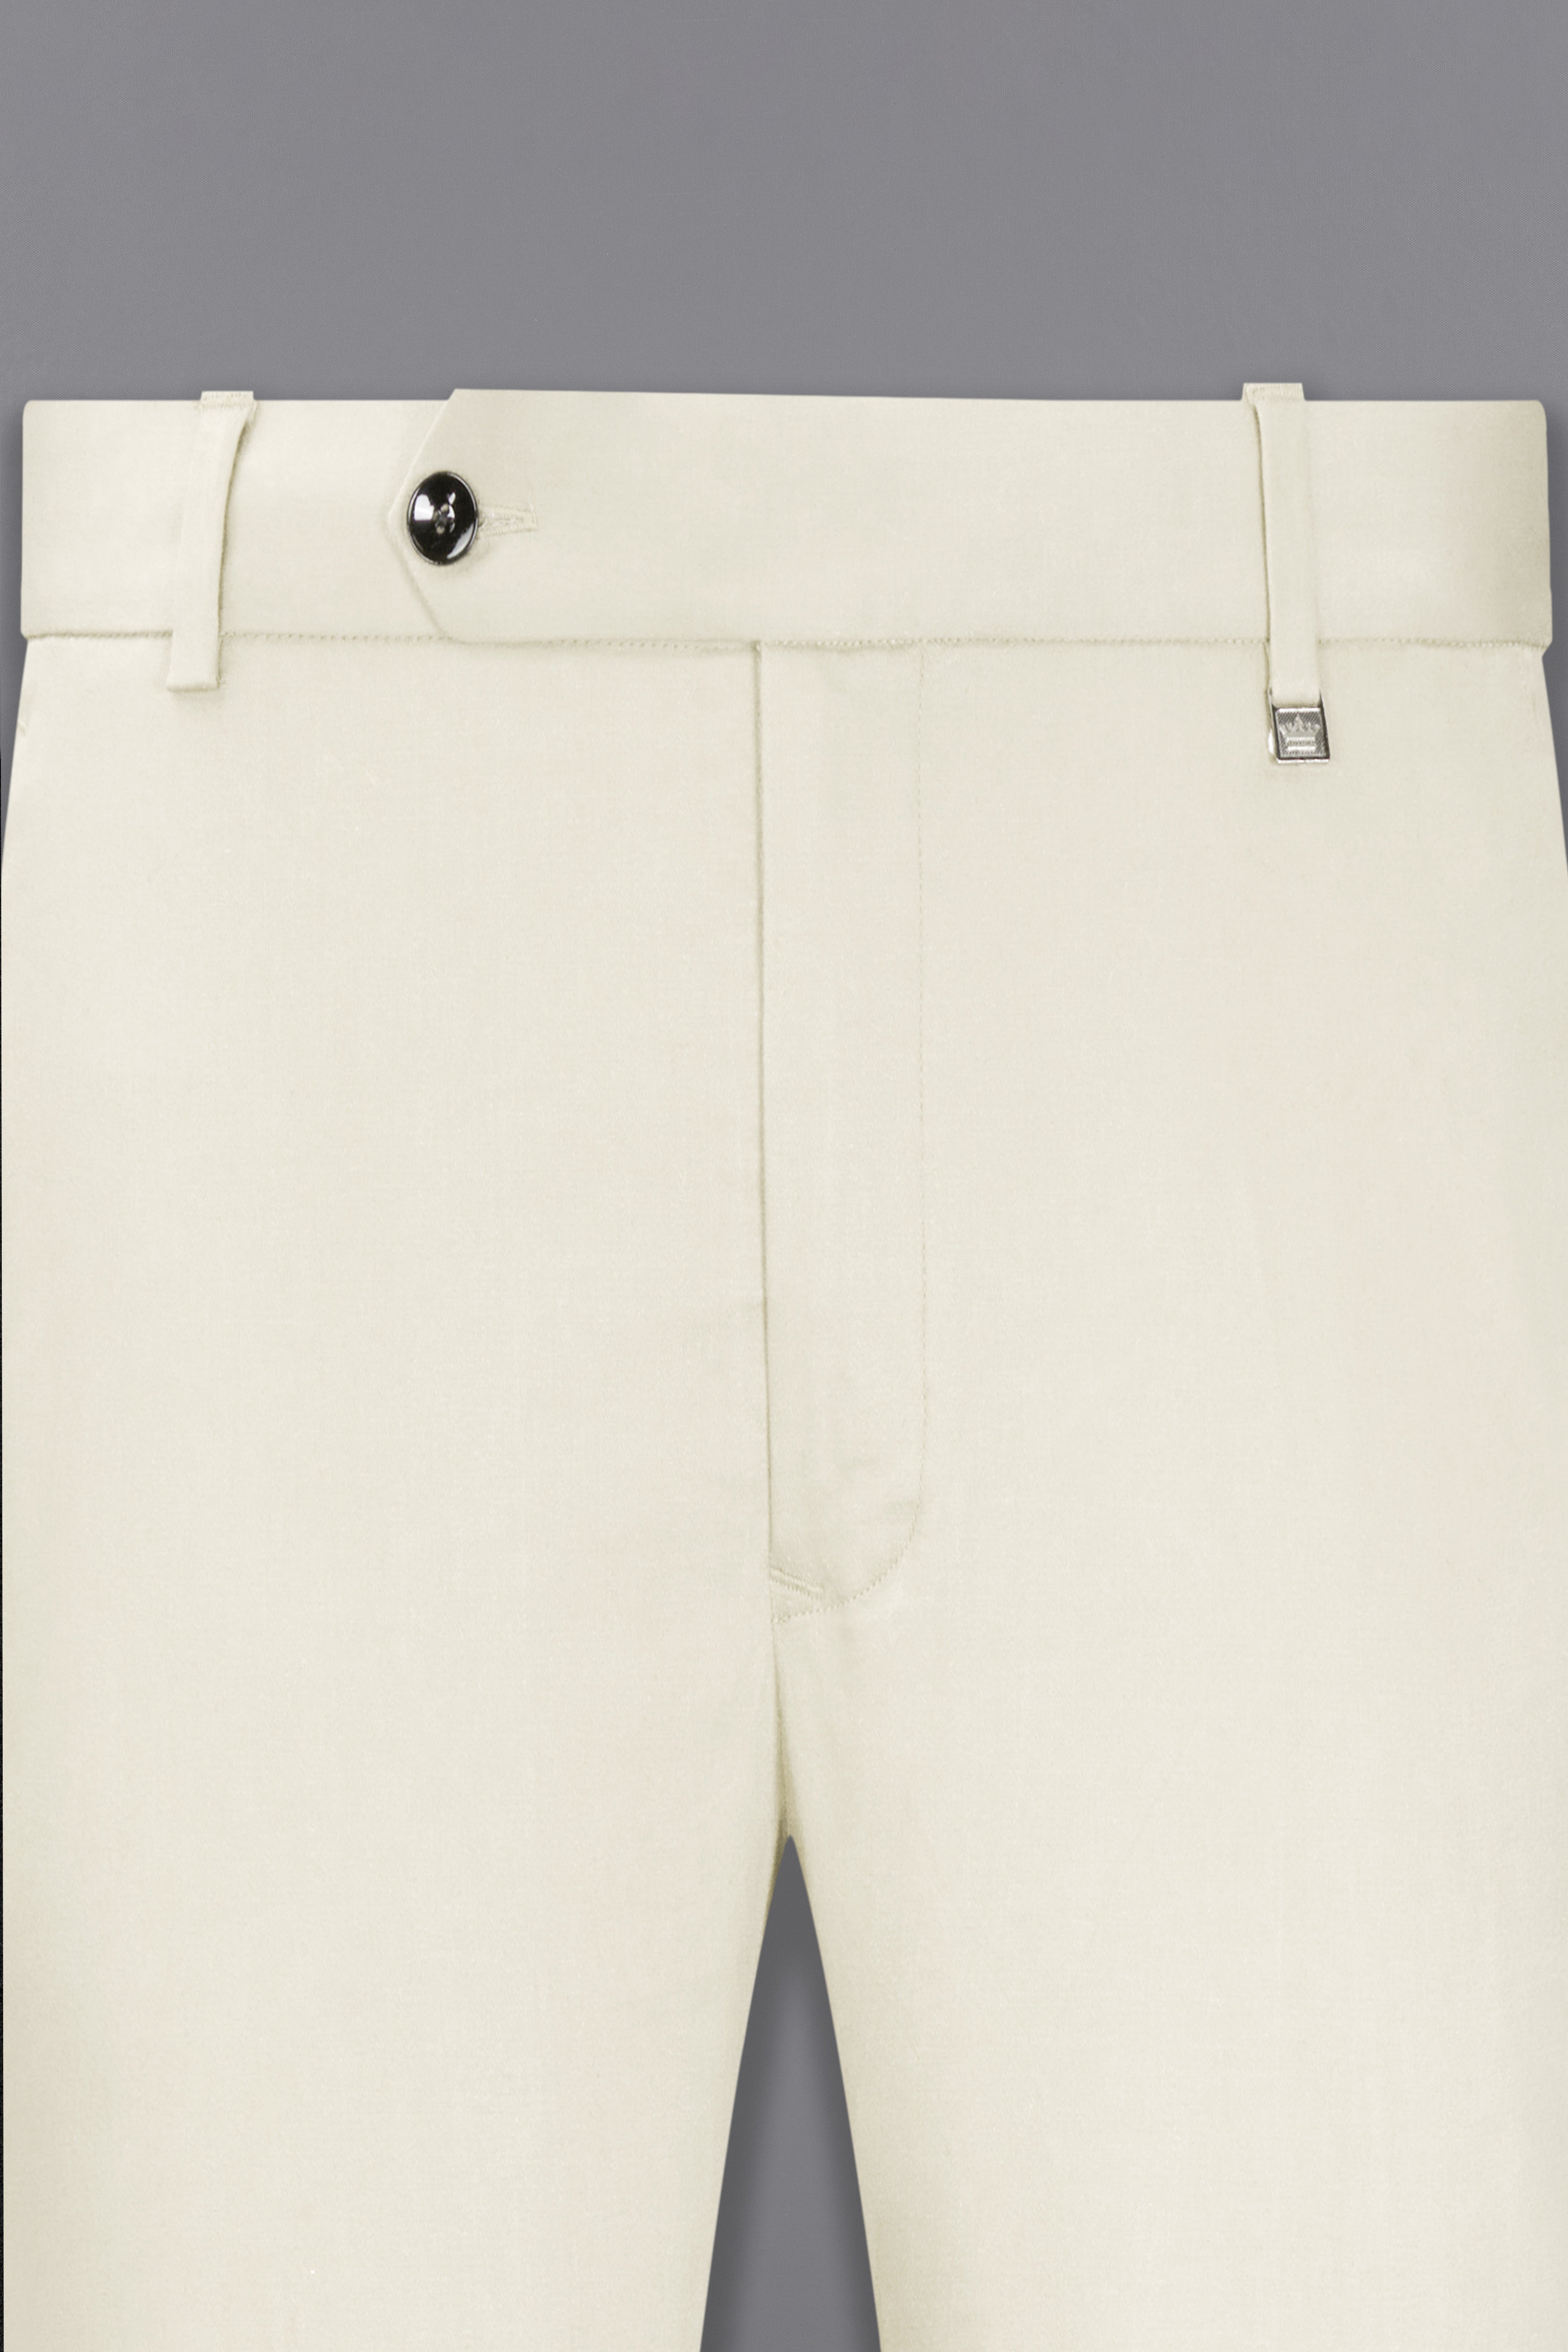 Merino Cream Cross Placket Bandhgala Premium Cotton Stretchable traveler Suit